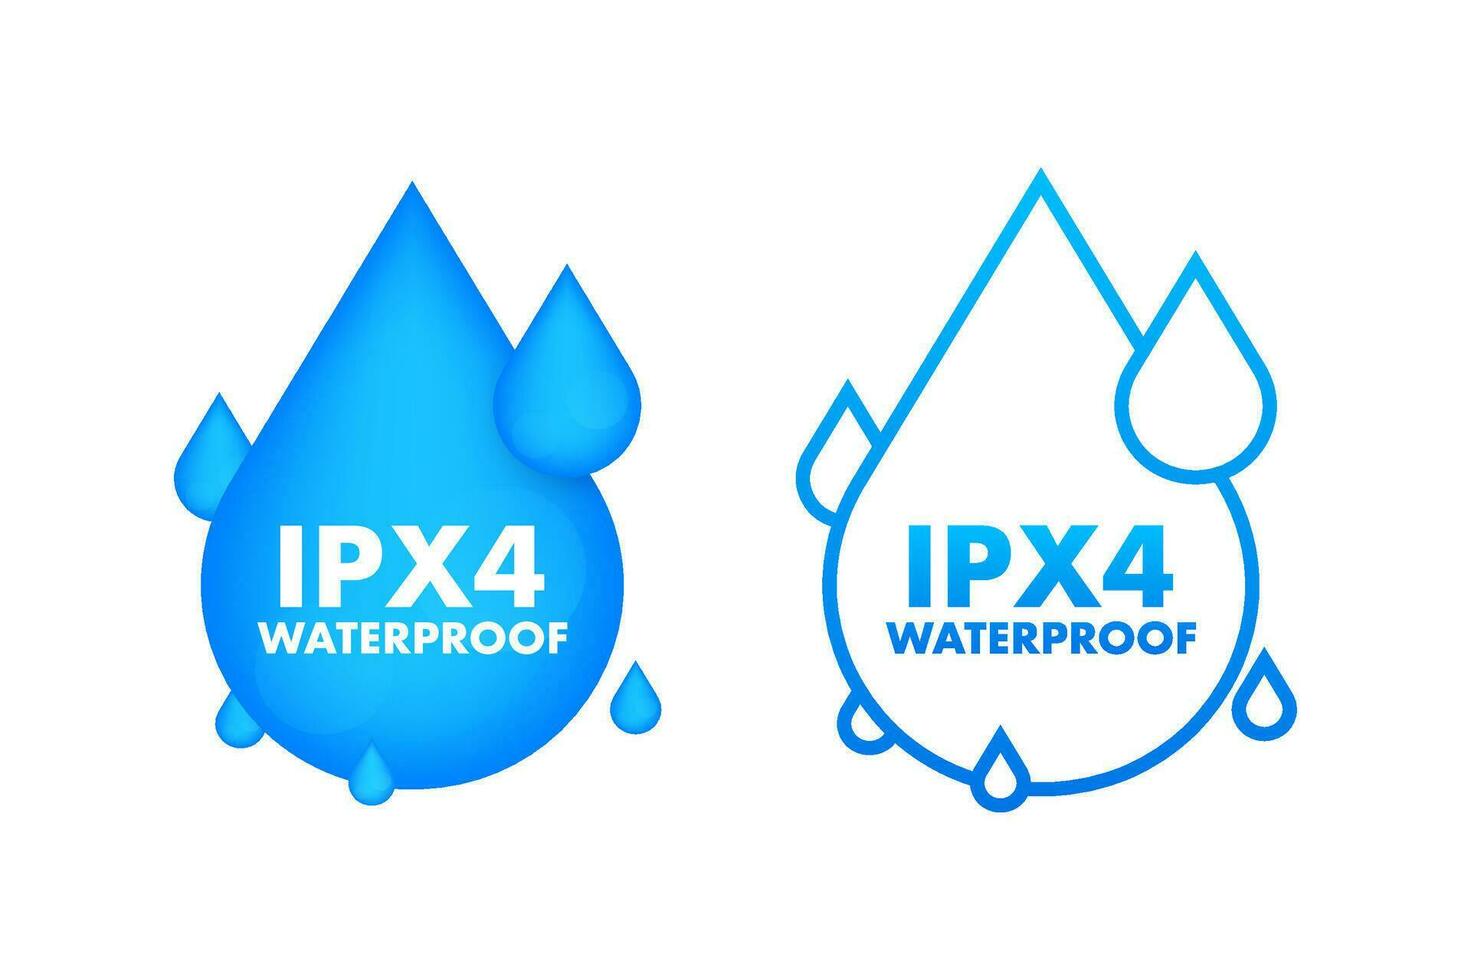 ipx4 waterproof, water resistance level information sign. vector